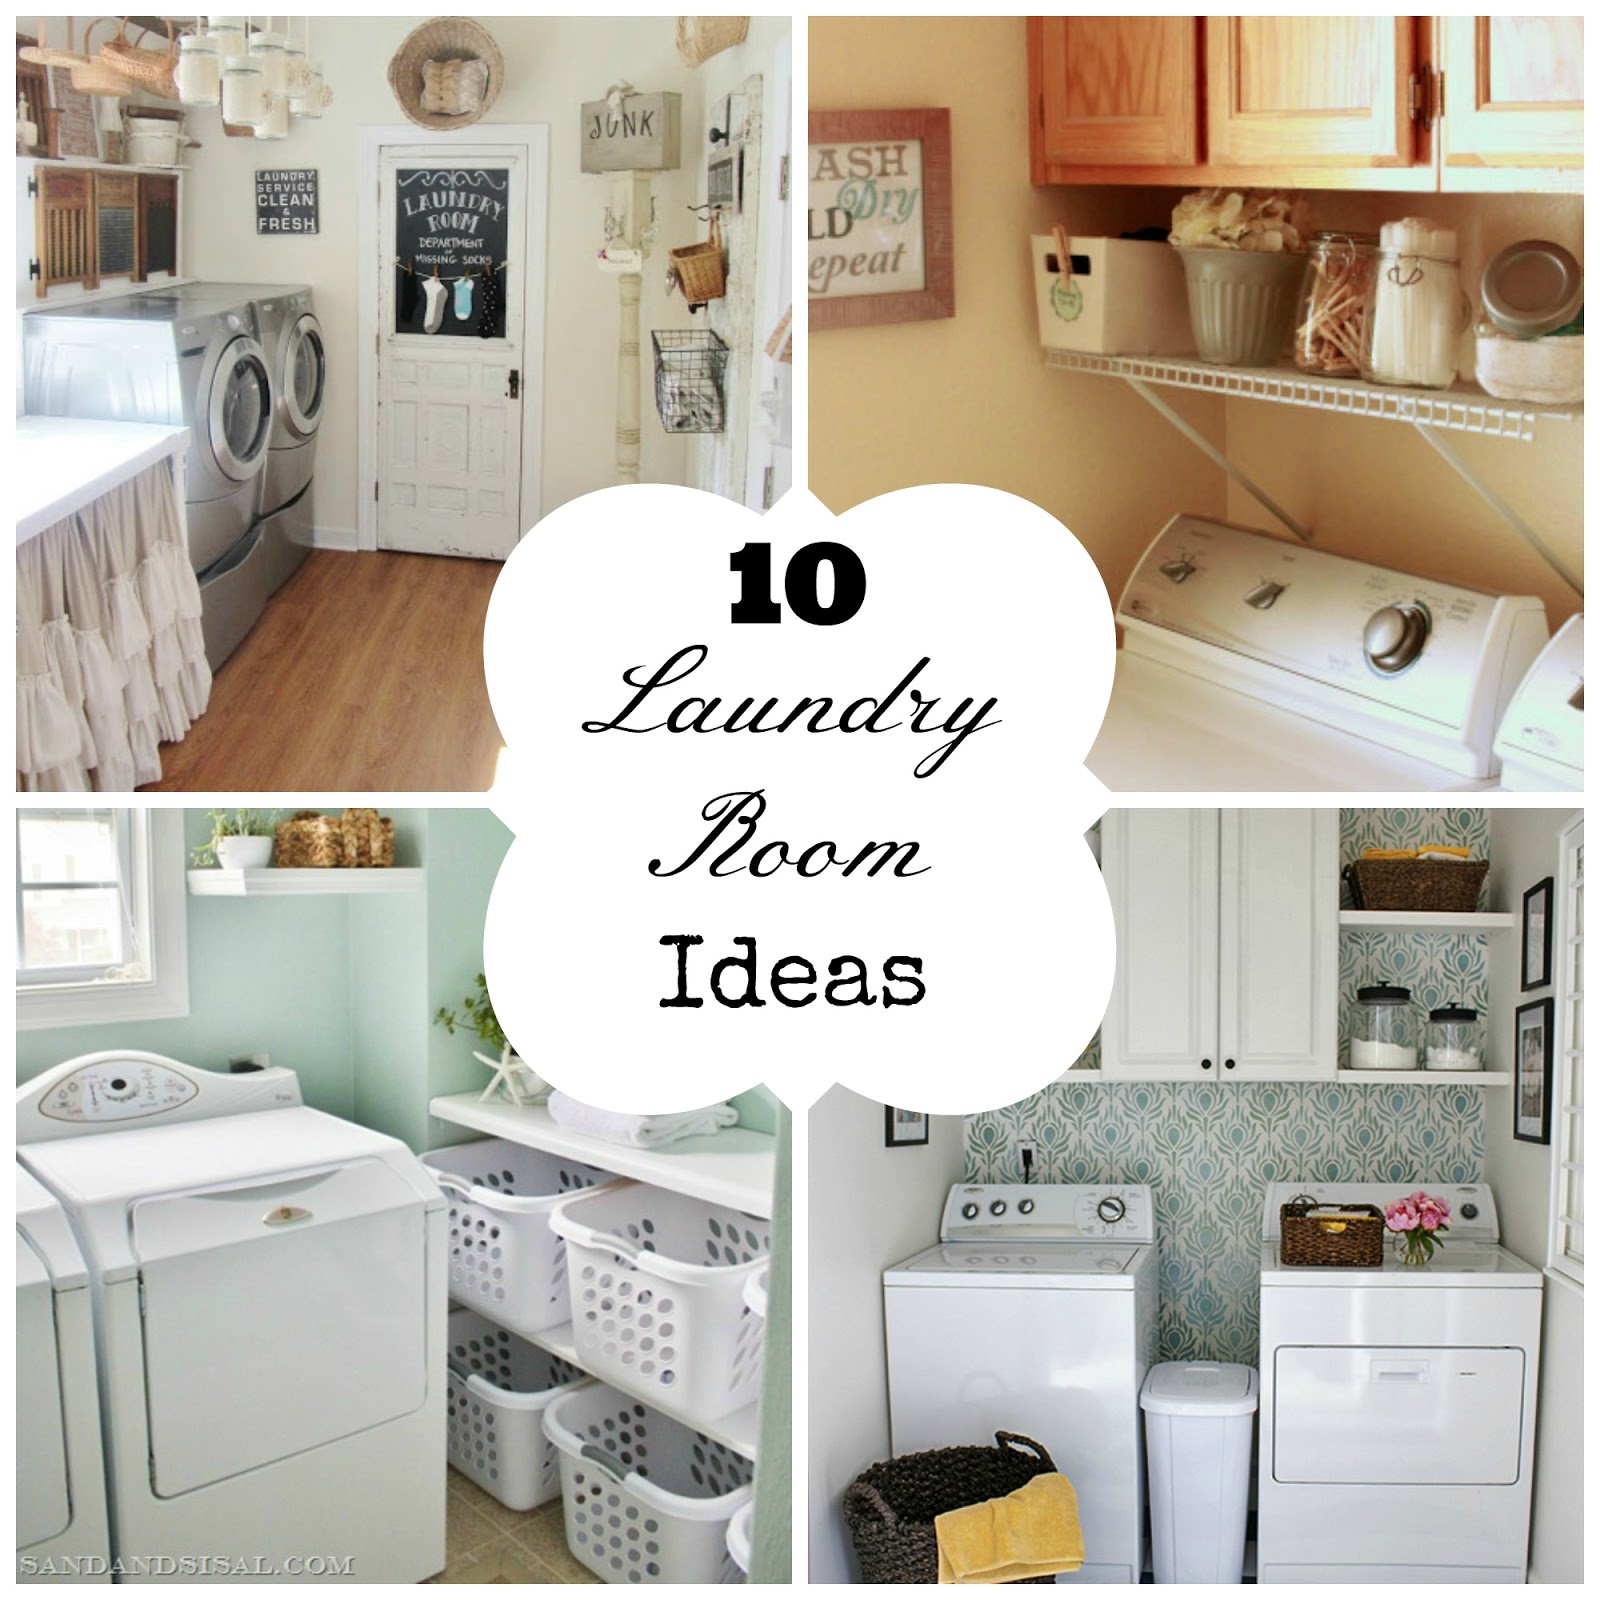 Fun Home Things: 10 Laundry Room Ideas